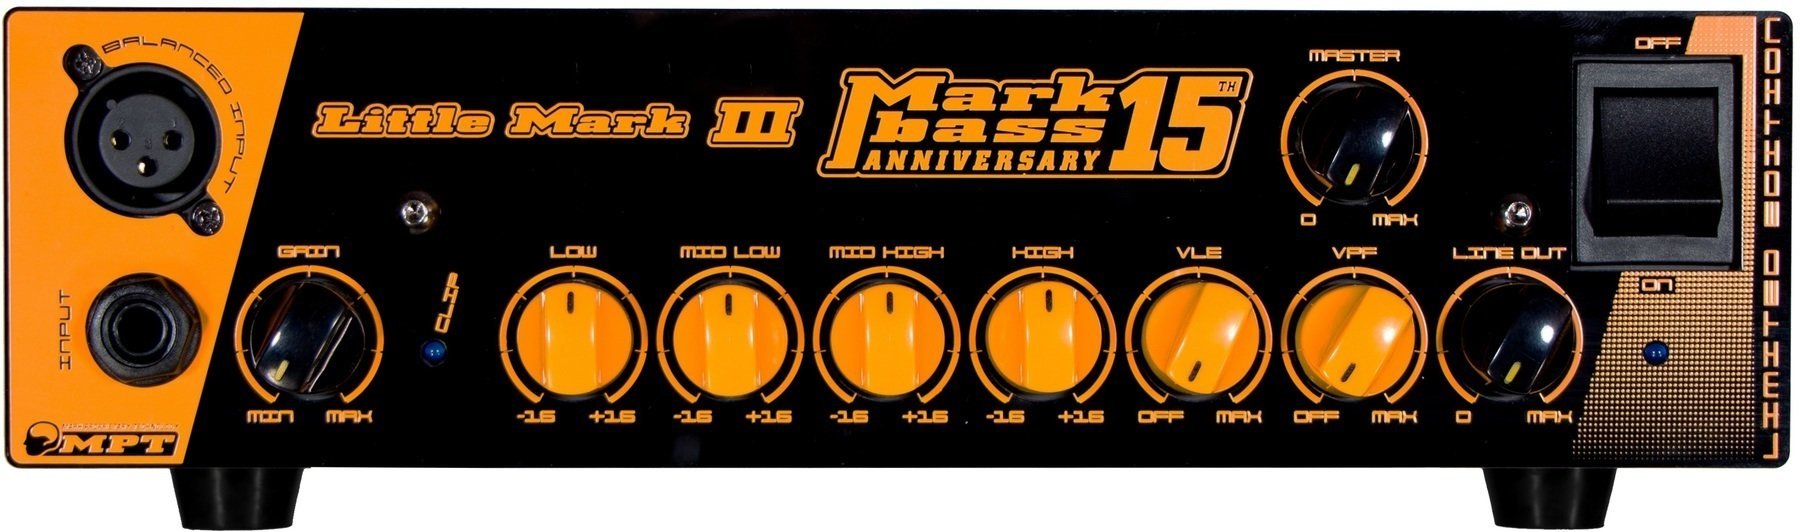 Amplificador solid-state de baixo Markbass Little Mark III Anniversary 15